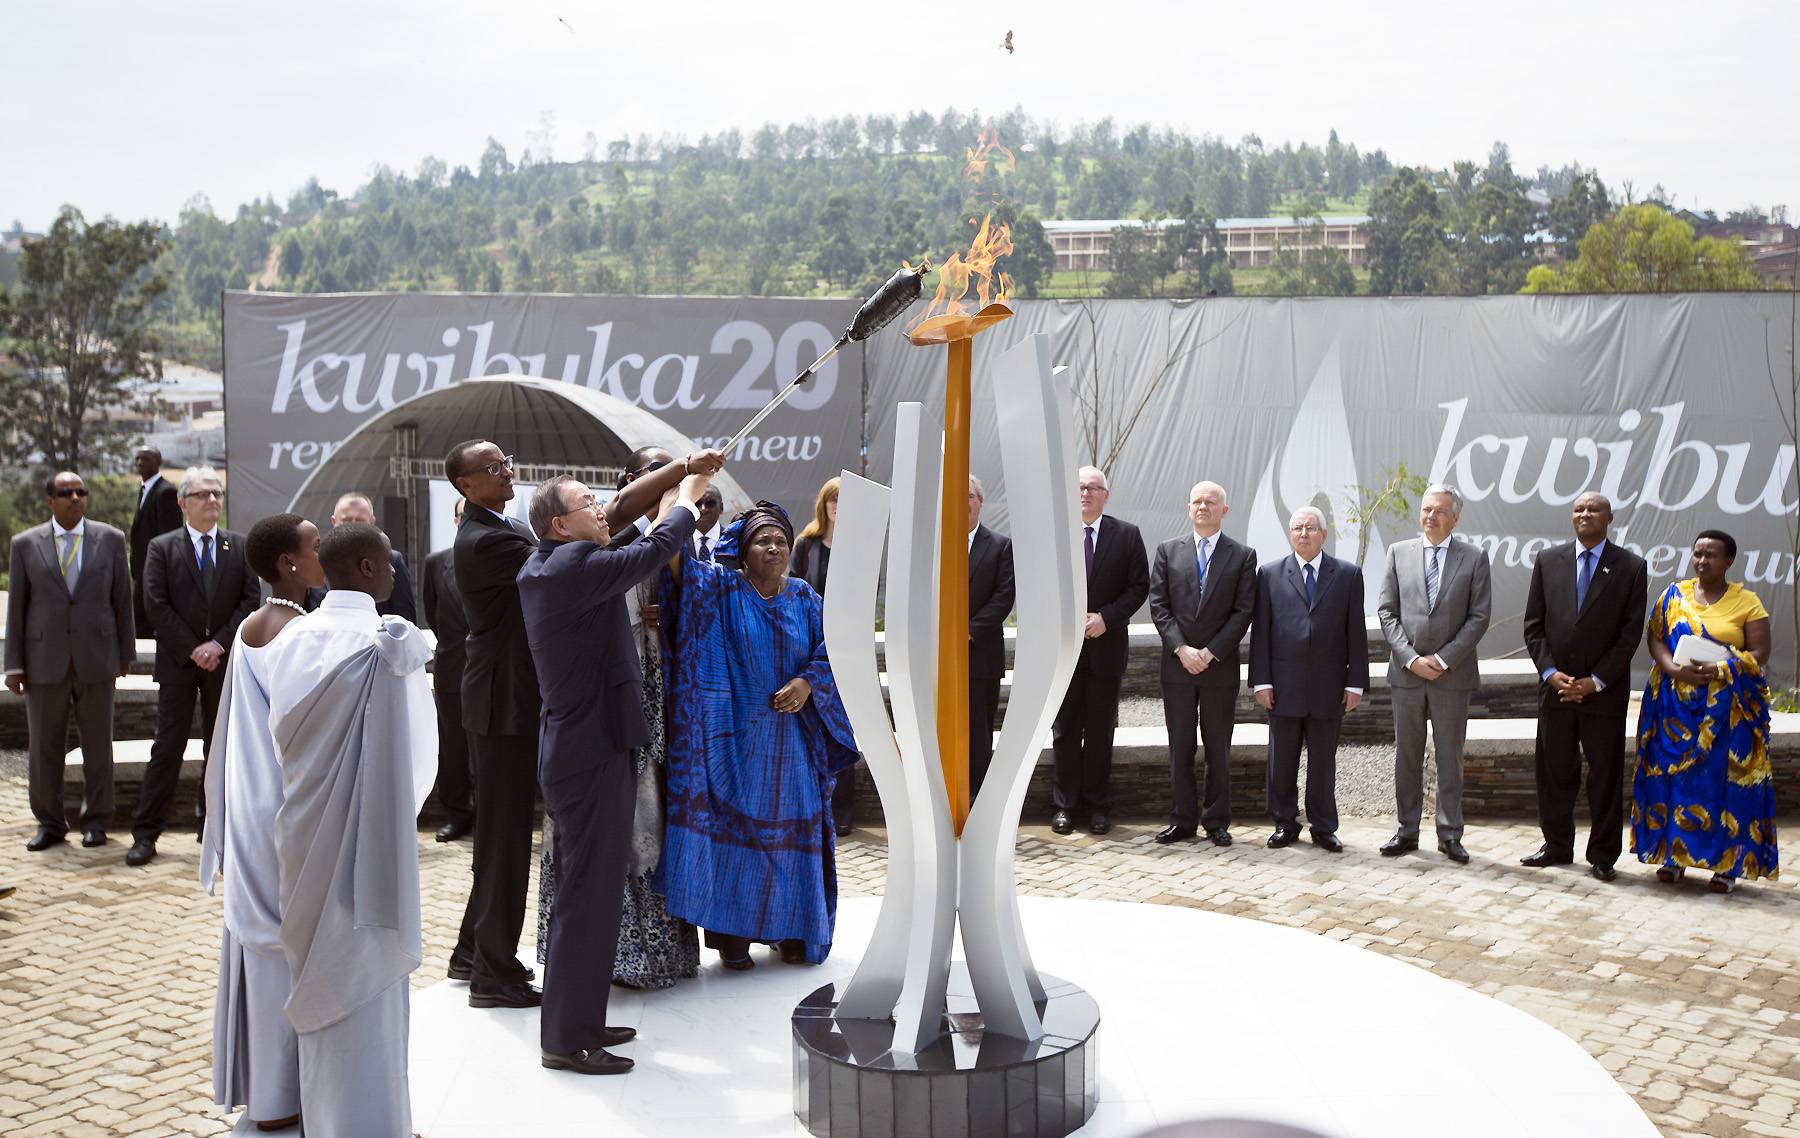 Ceremony Marks 20th Anniversary of Rwanda Genocide